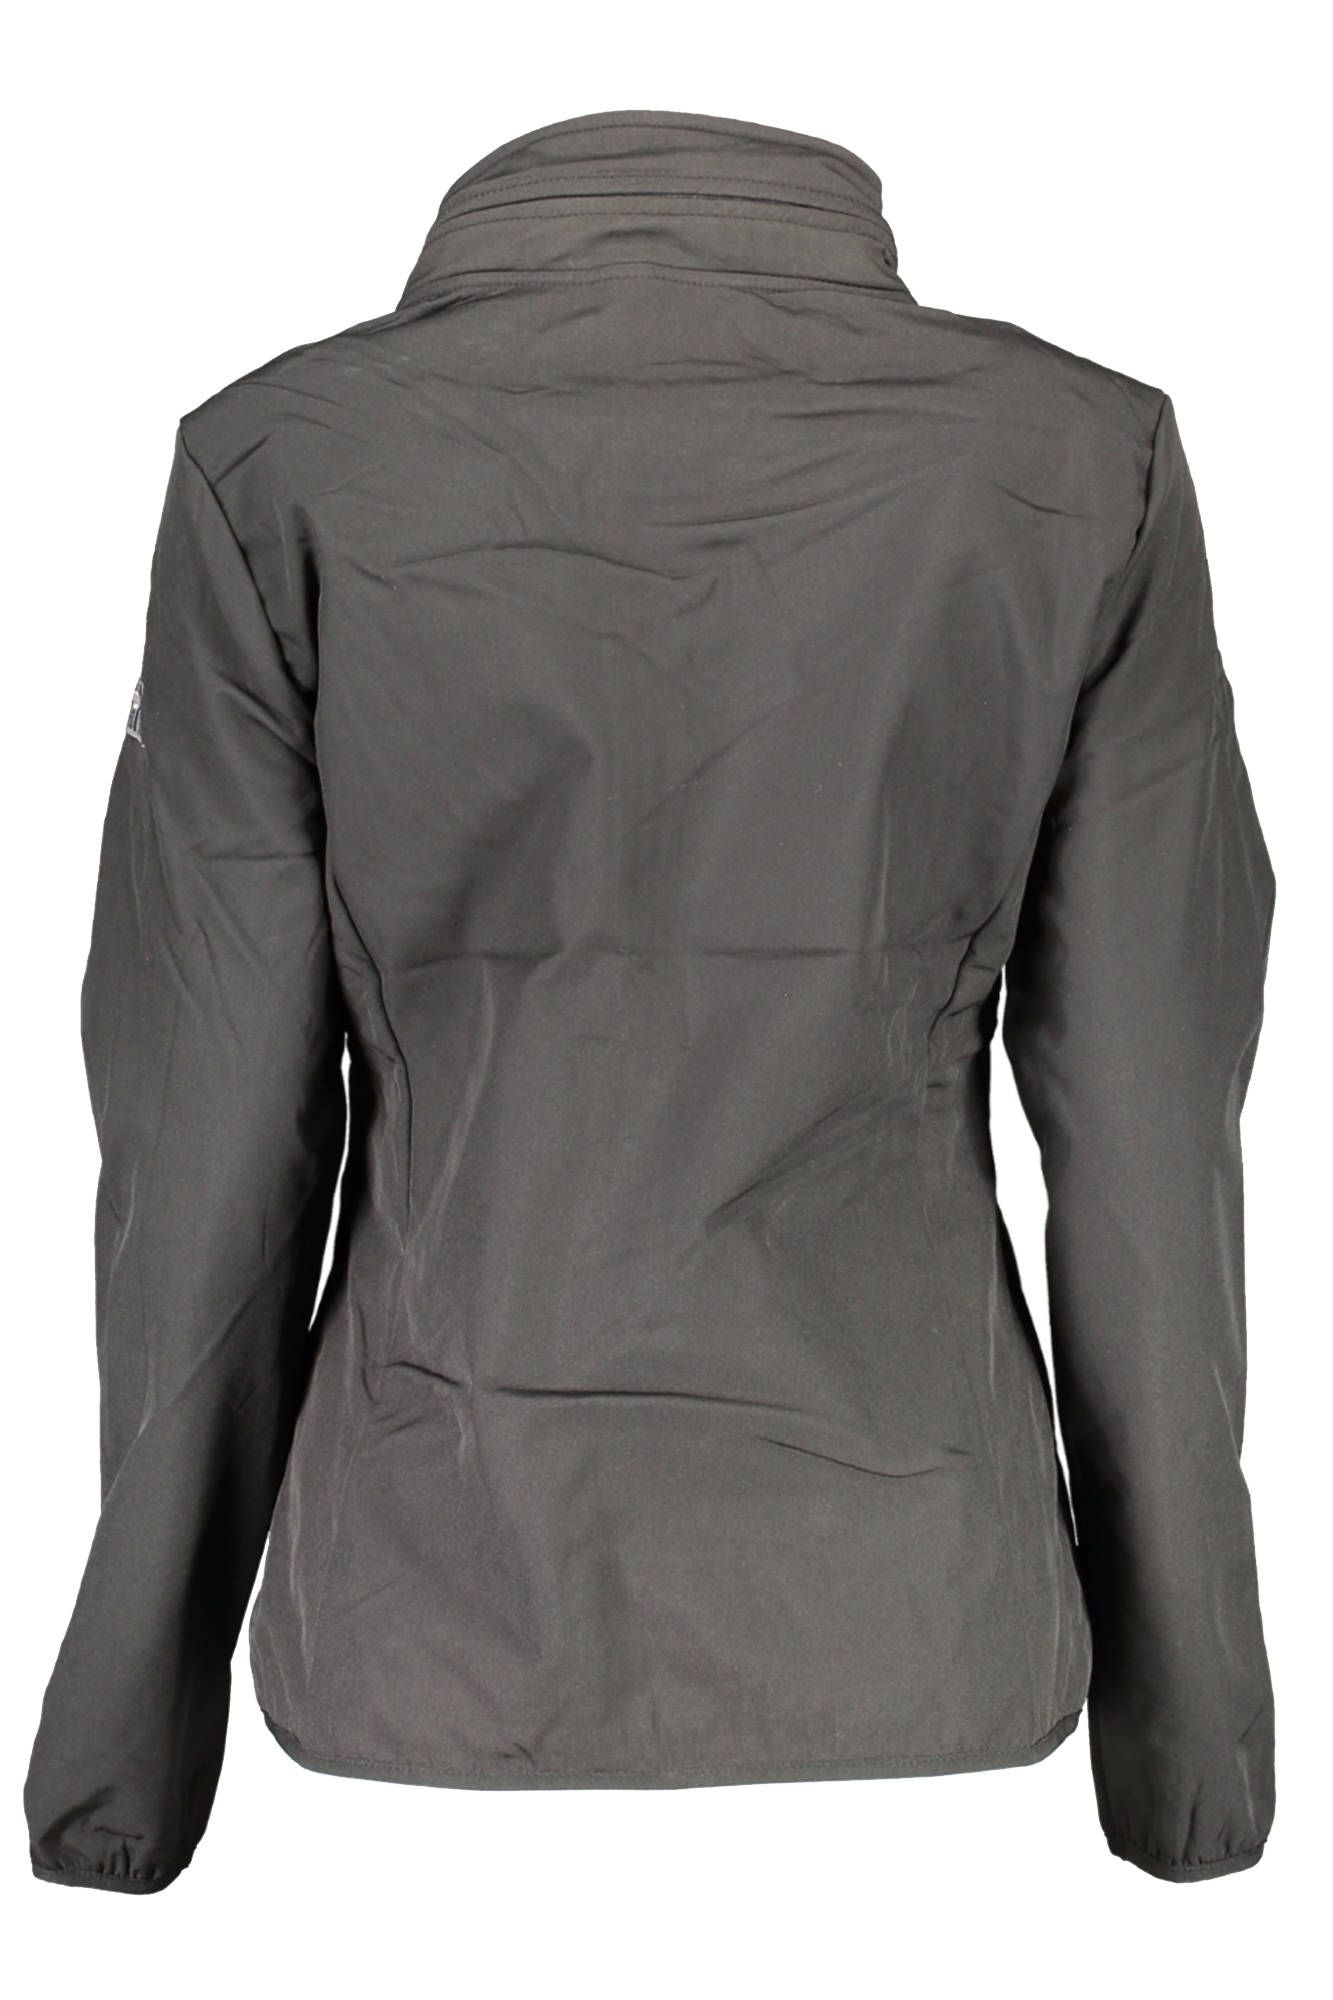 Sleek Black Sports Jacket with Removable Hood